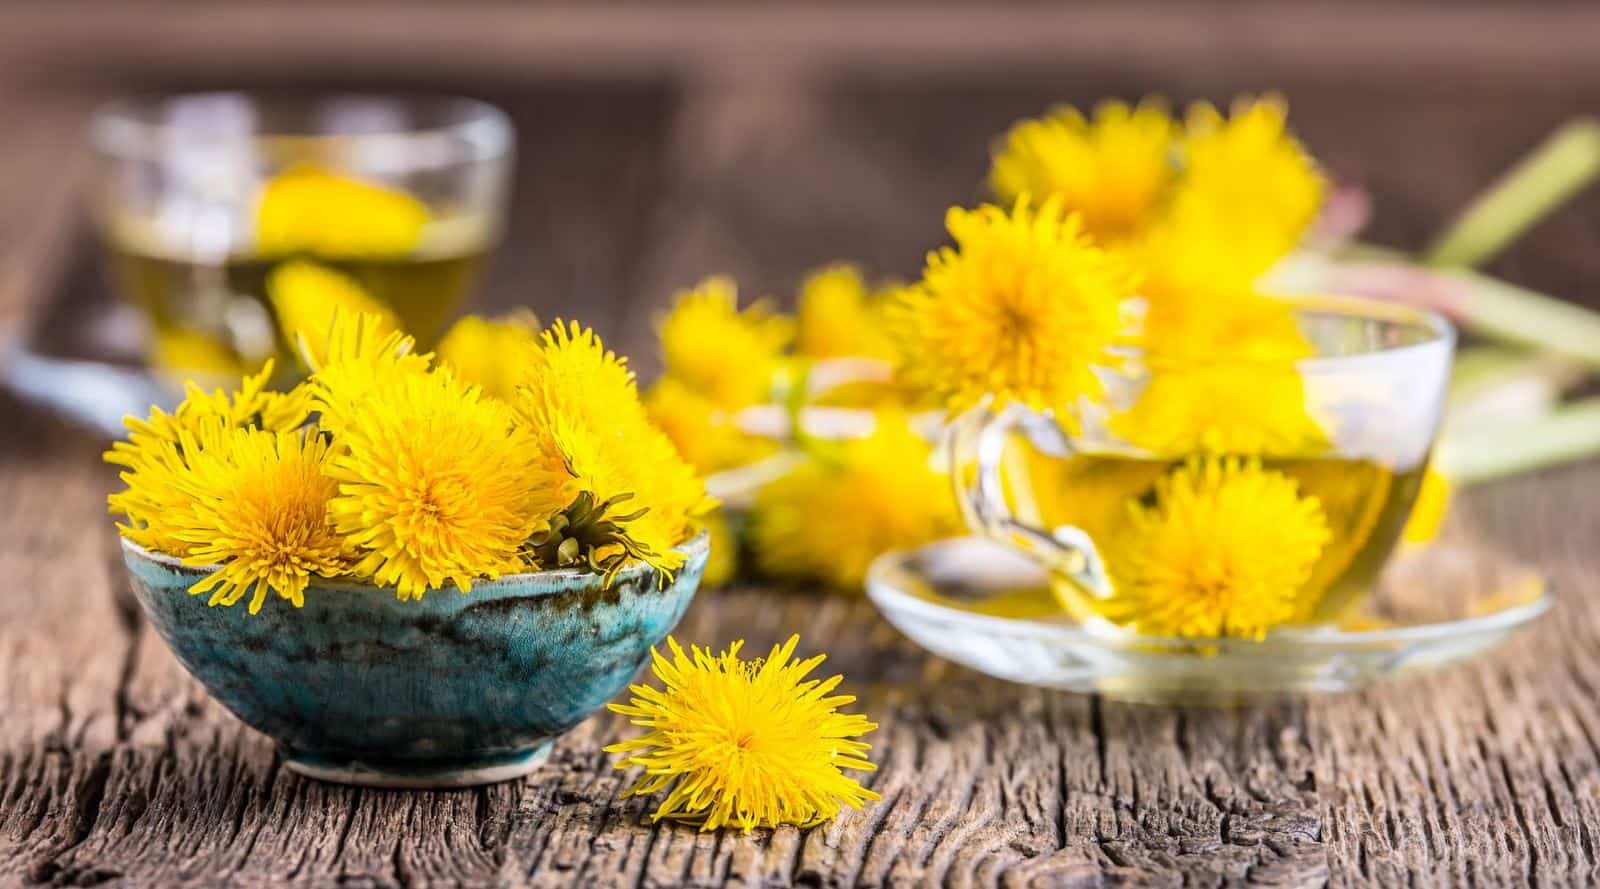 how to make dandelion tea – recipes and benefits